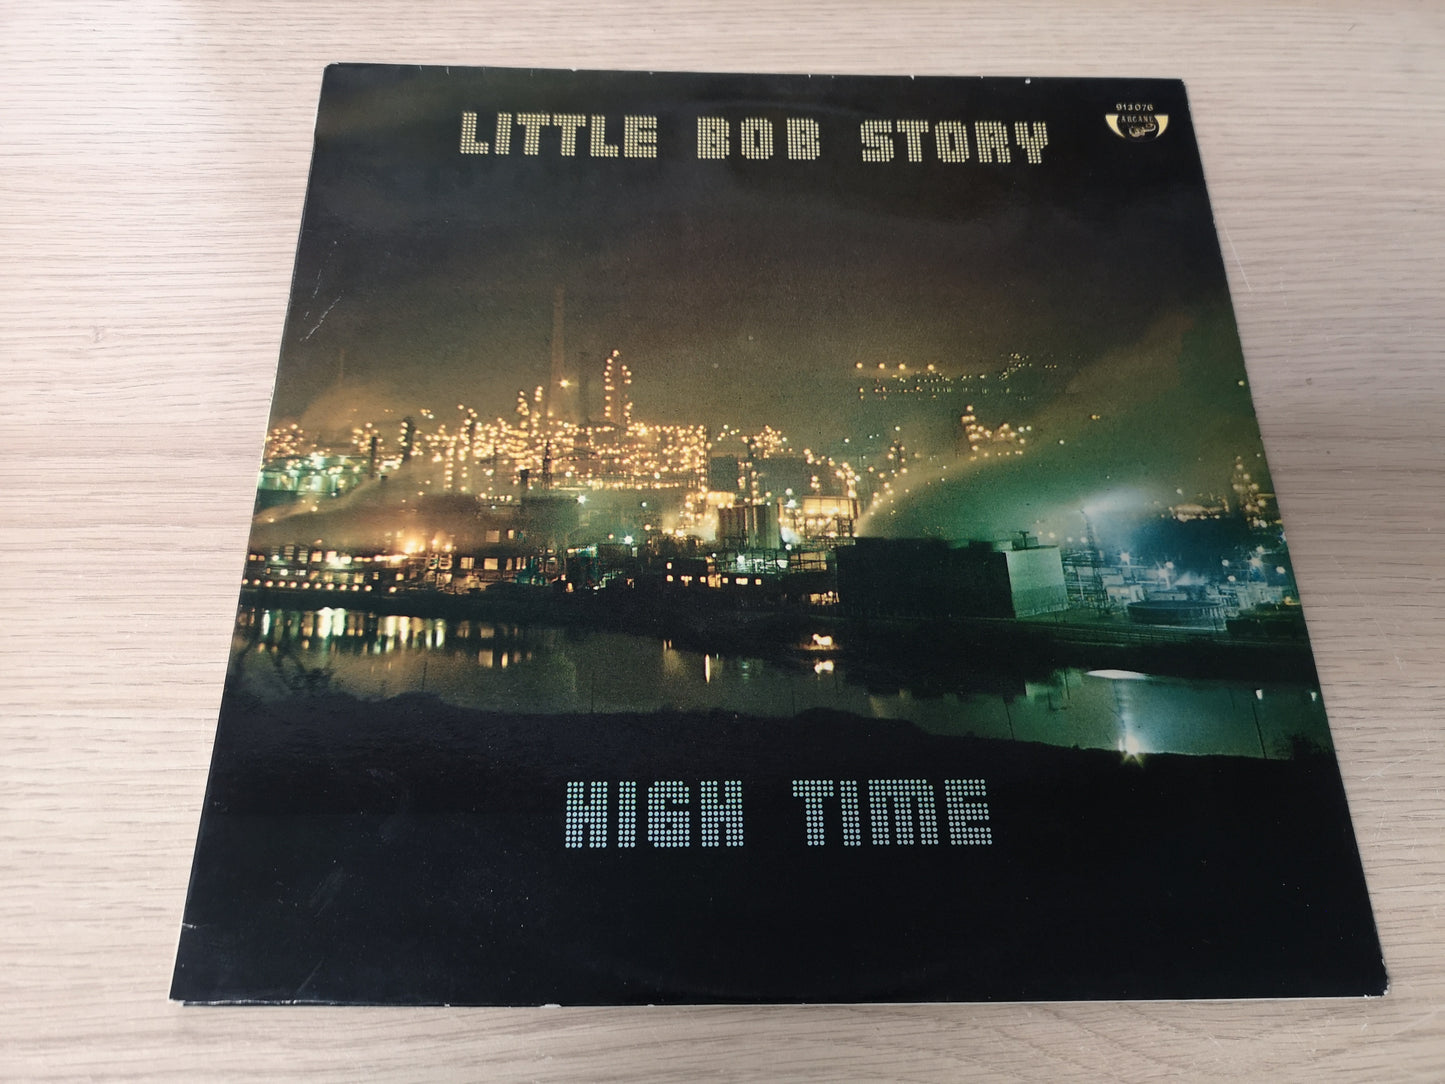 Little Bob Story "High Time" Orig France 1976 EX/EX